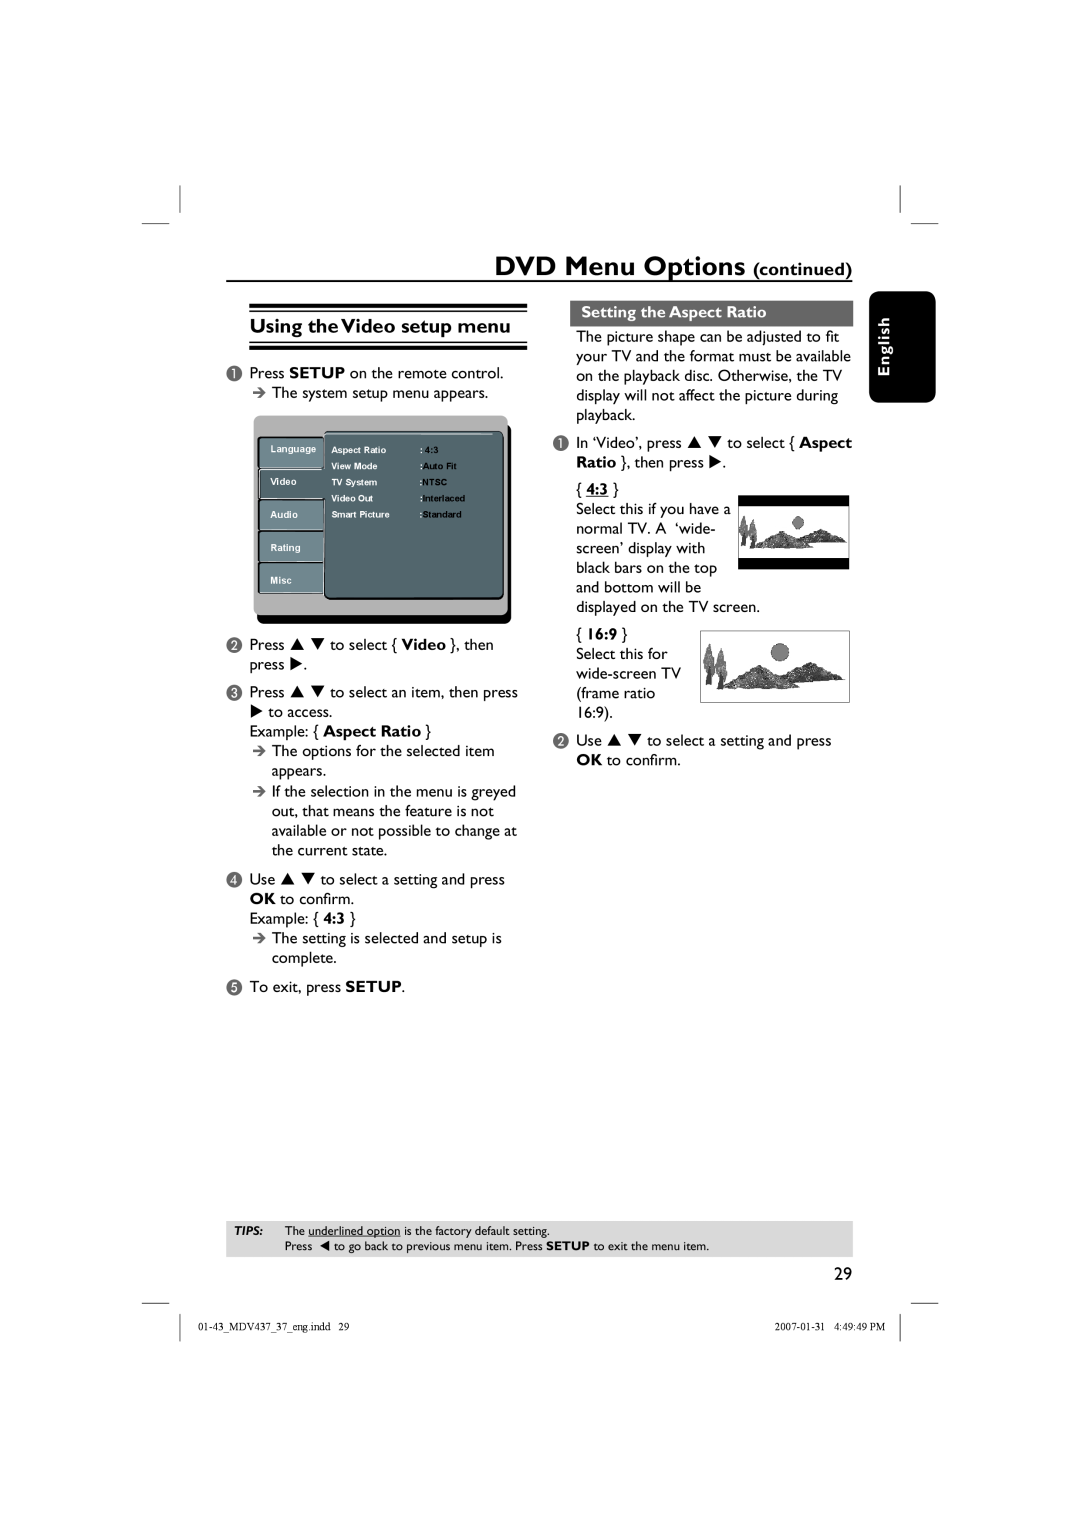 Magnavox MDV437 DVD Menu Options continued, Using the Video setup menu, Example Aspect Ratio, Setting the Aspect Ratio 